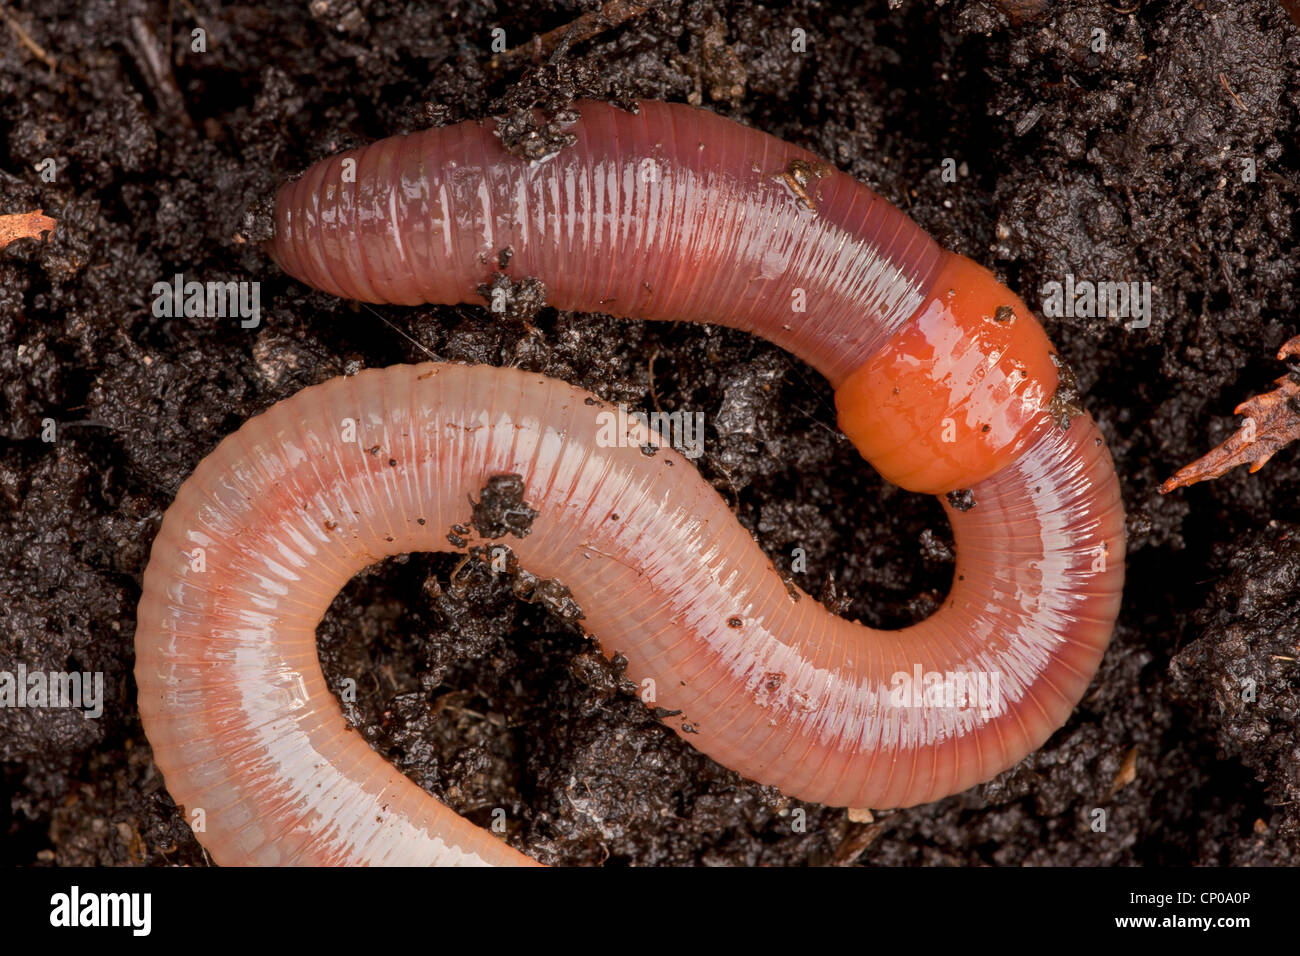 common earthworm, earthworm; lob worm, dew worm, squirreltail worm